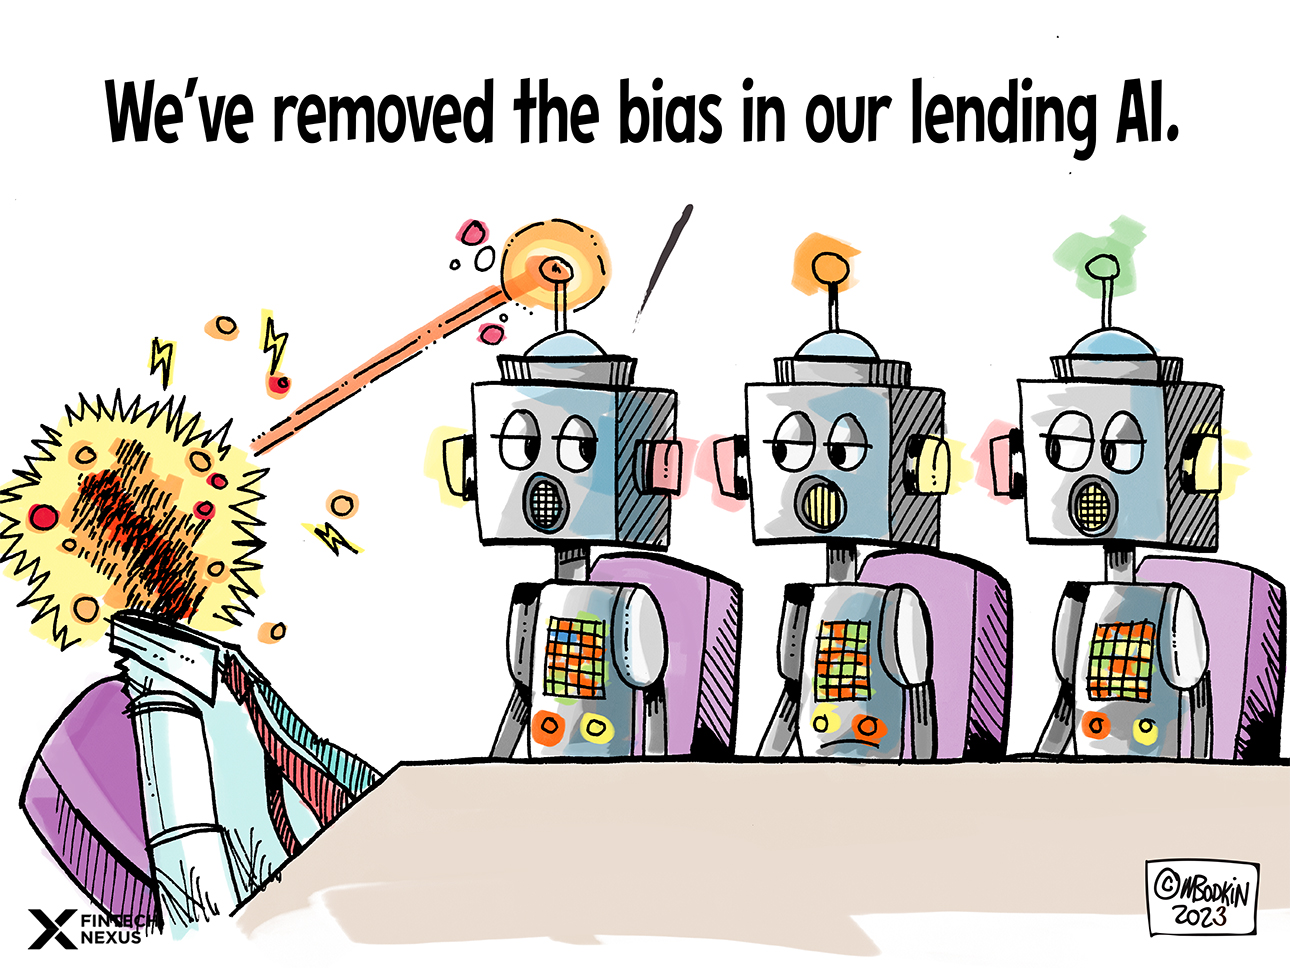 Removing bias in lending